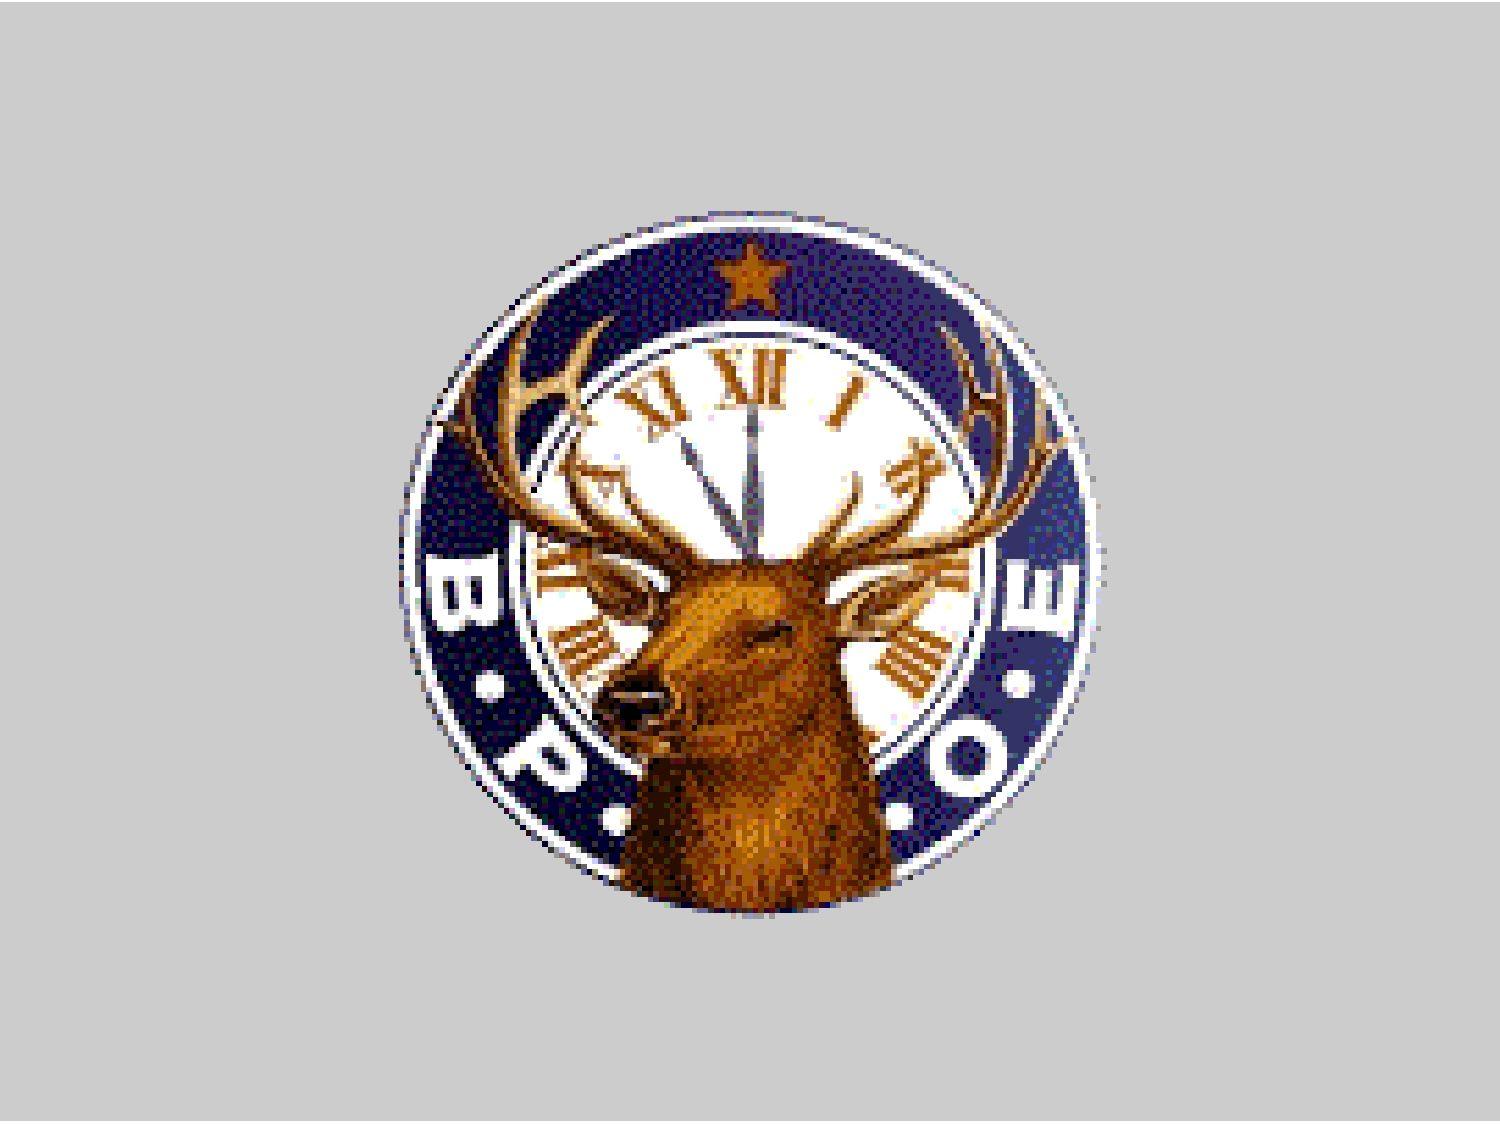 BPOE Logo - BPOE Elks Logo free image